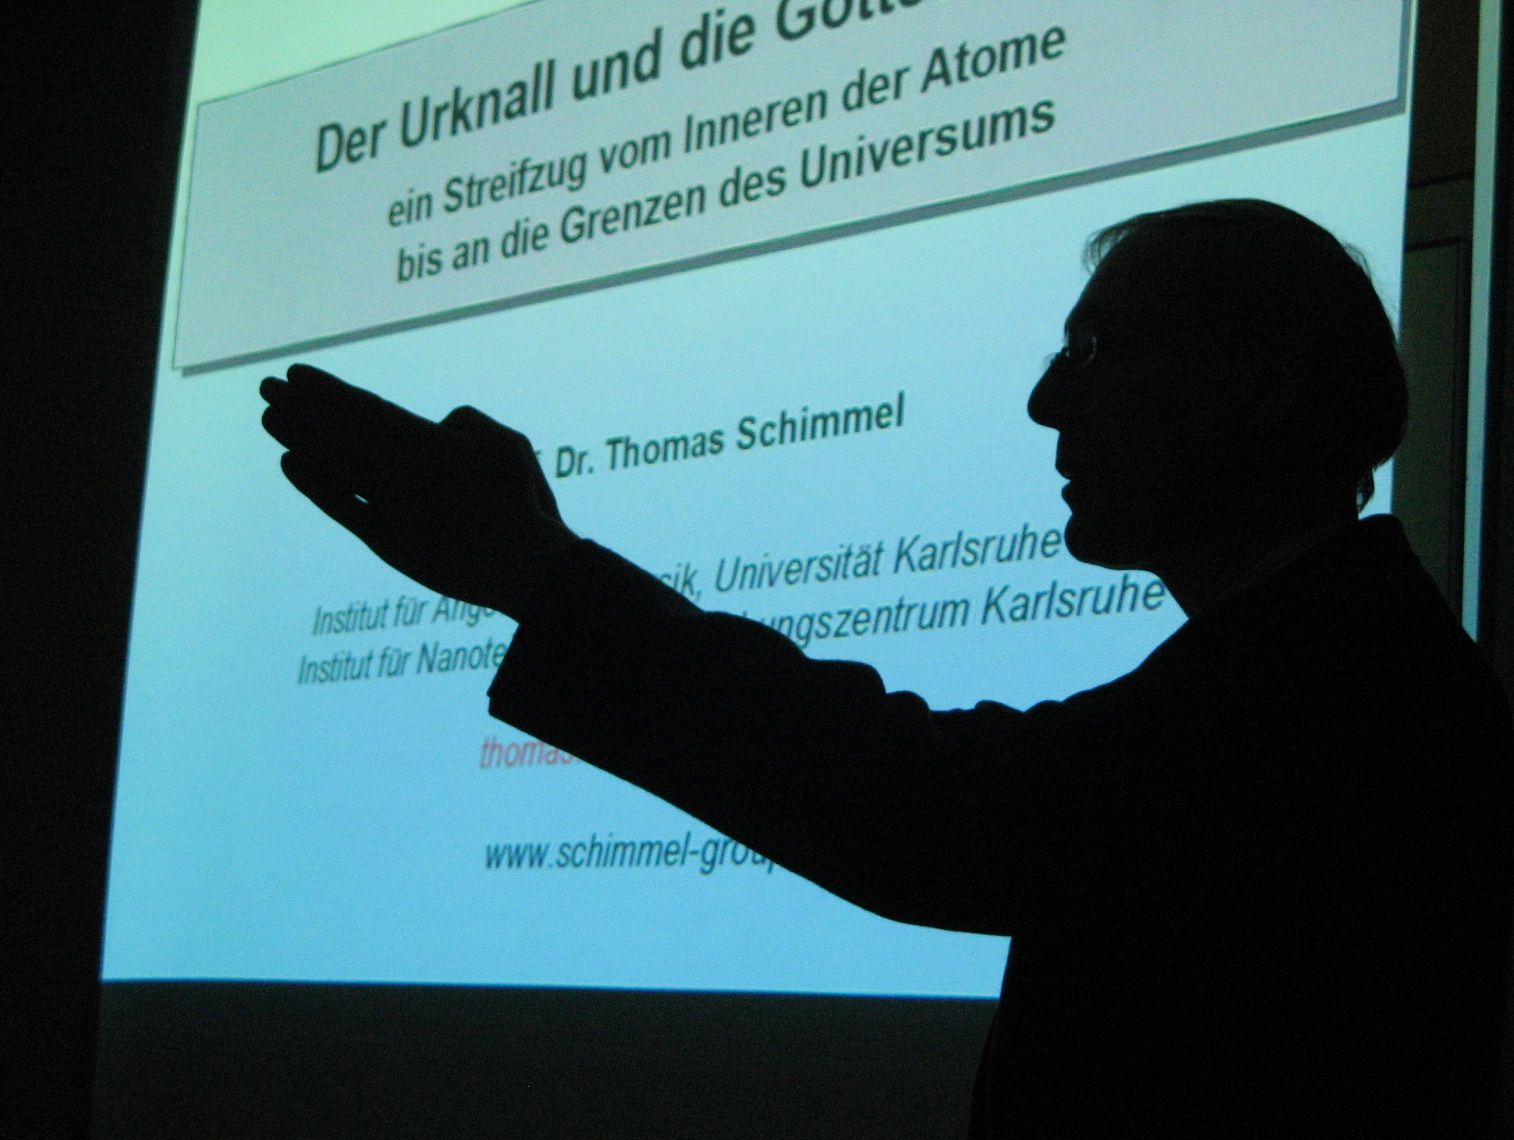 Prof. Dr. Thomas Schimmel